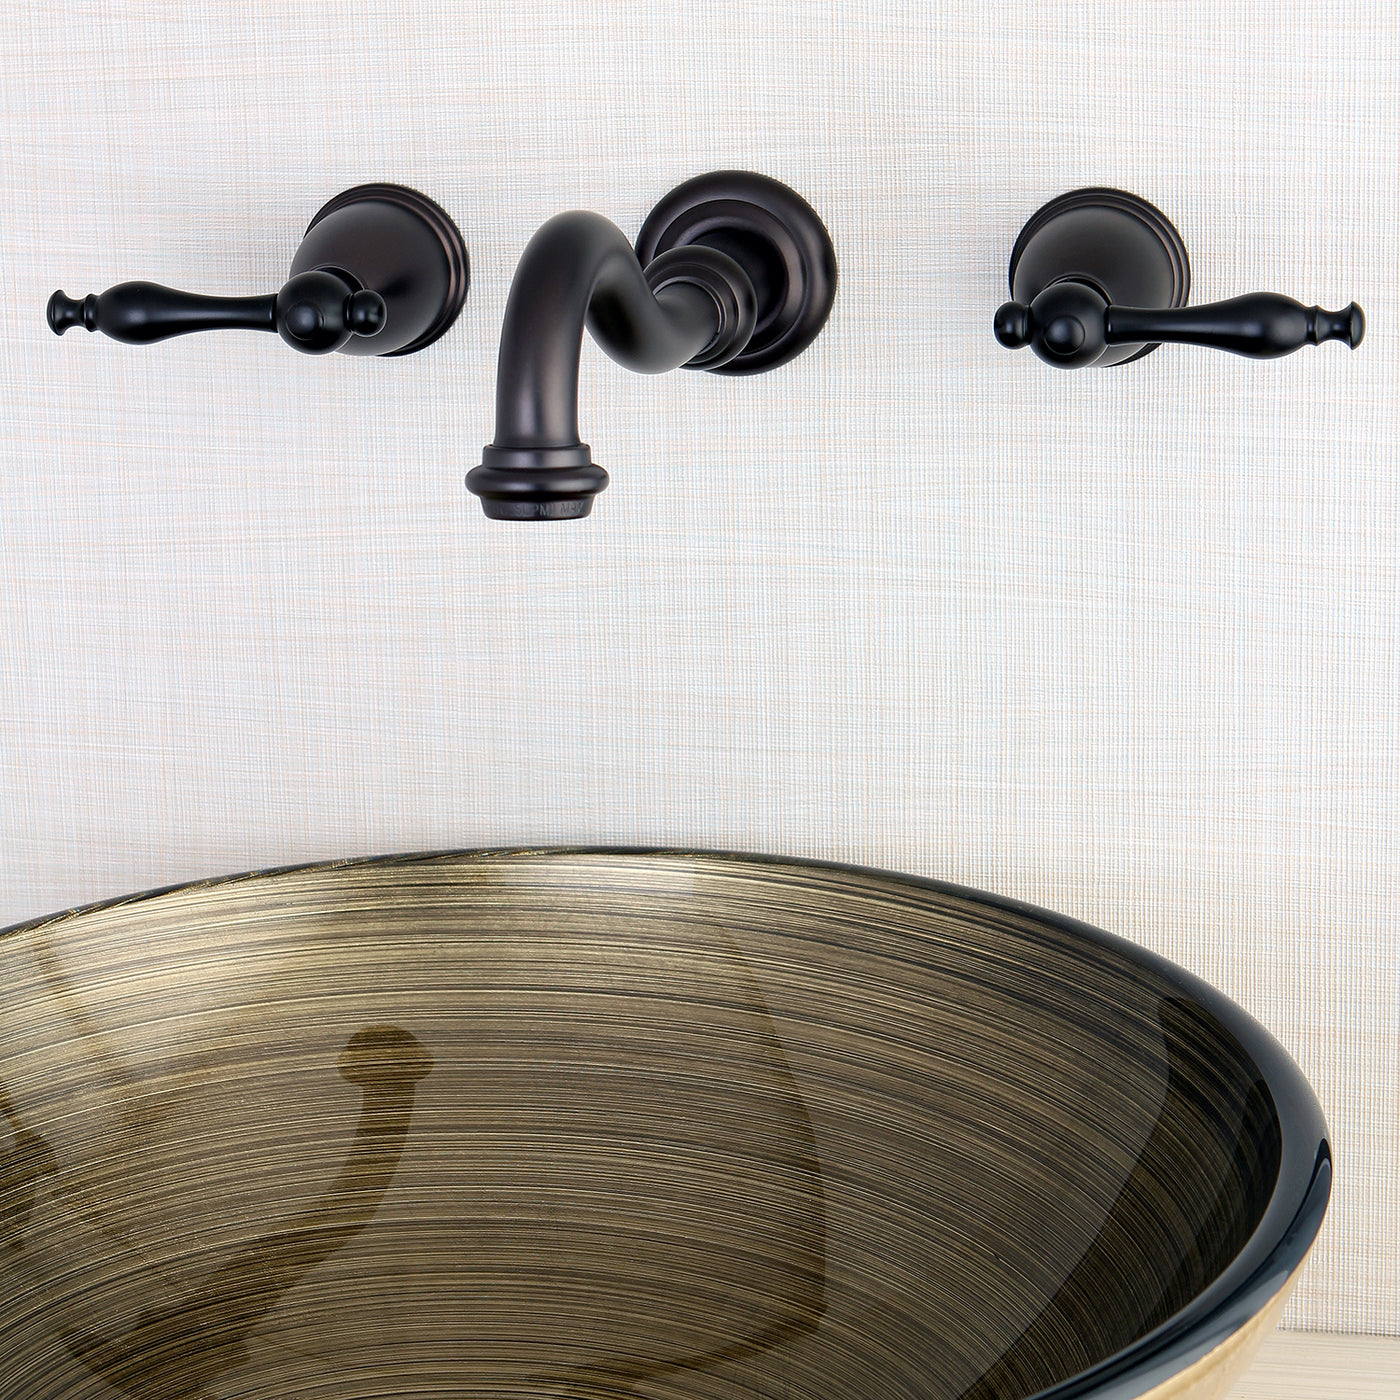 Elements of Design ES3125NL Wall Mount Bathroom Faucet, Oil Rubbed Bronze